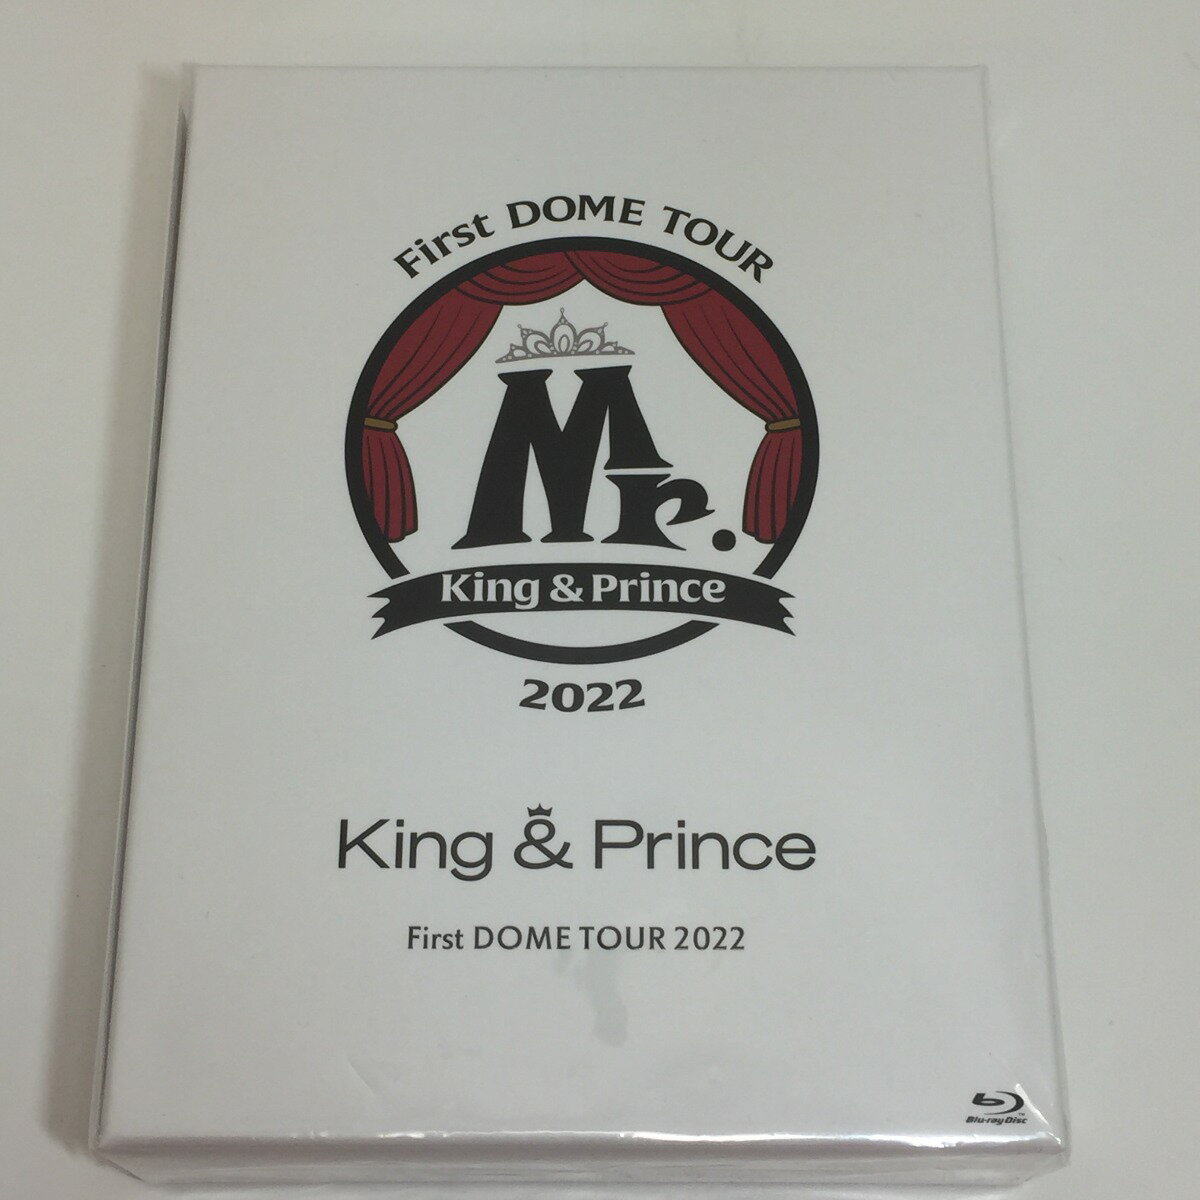 ◎◎【中古】 King&Prince FirstDOMETOUR 2022 Mr. 初回限定盤 Blu-ray/2枚組 中古品 Bランク